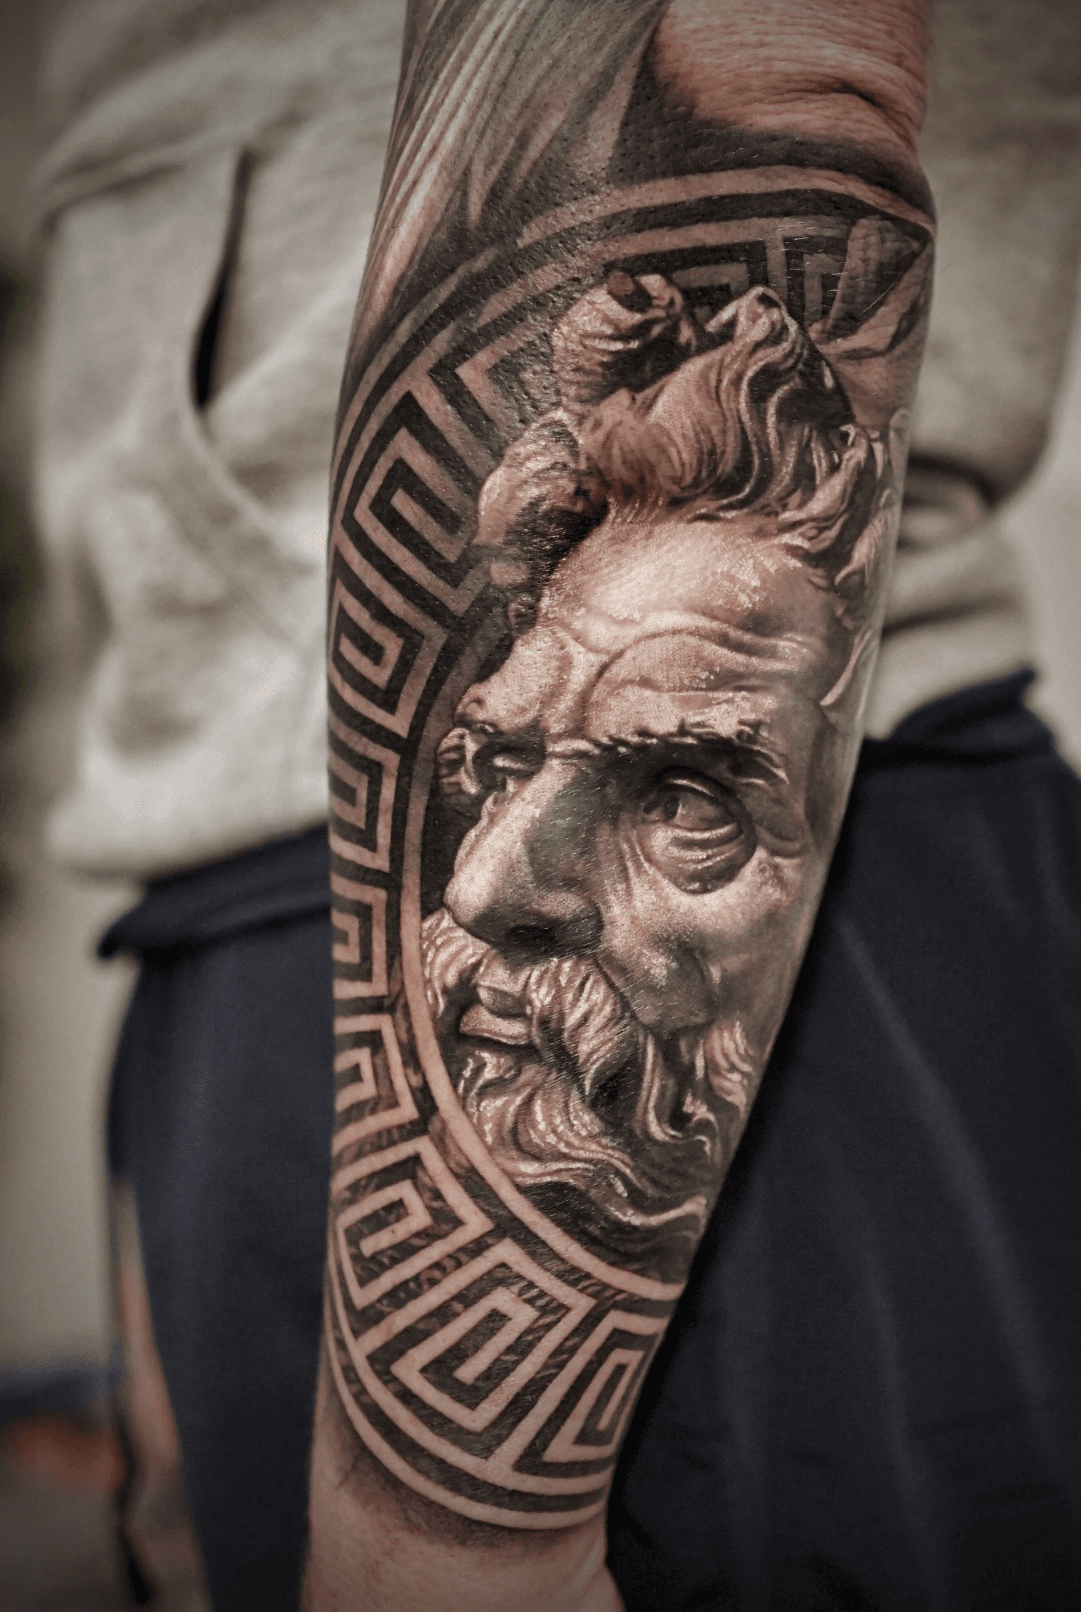 Zeus Done by Poseidontattoos at ravensclaw tattoo studio in Tacoma Wa  r tattoos